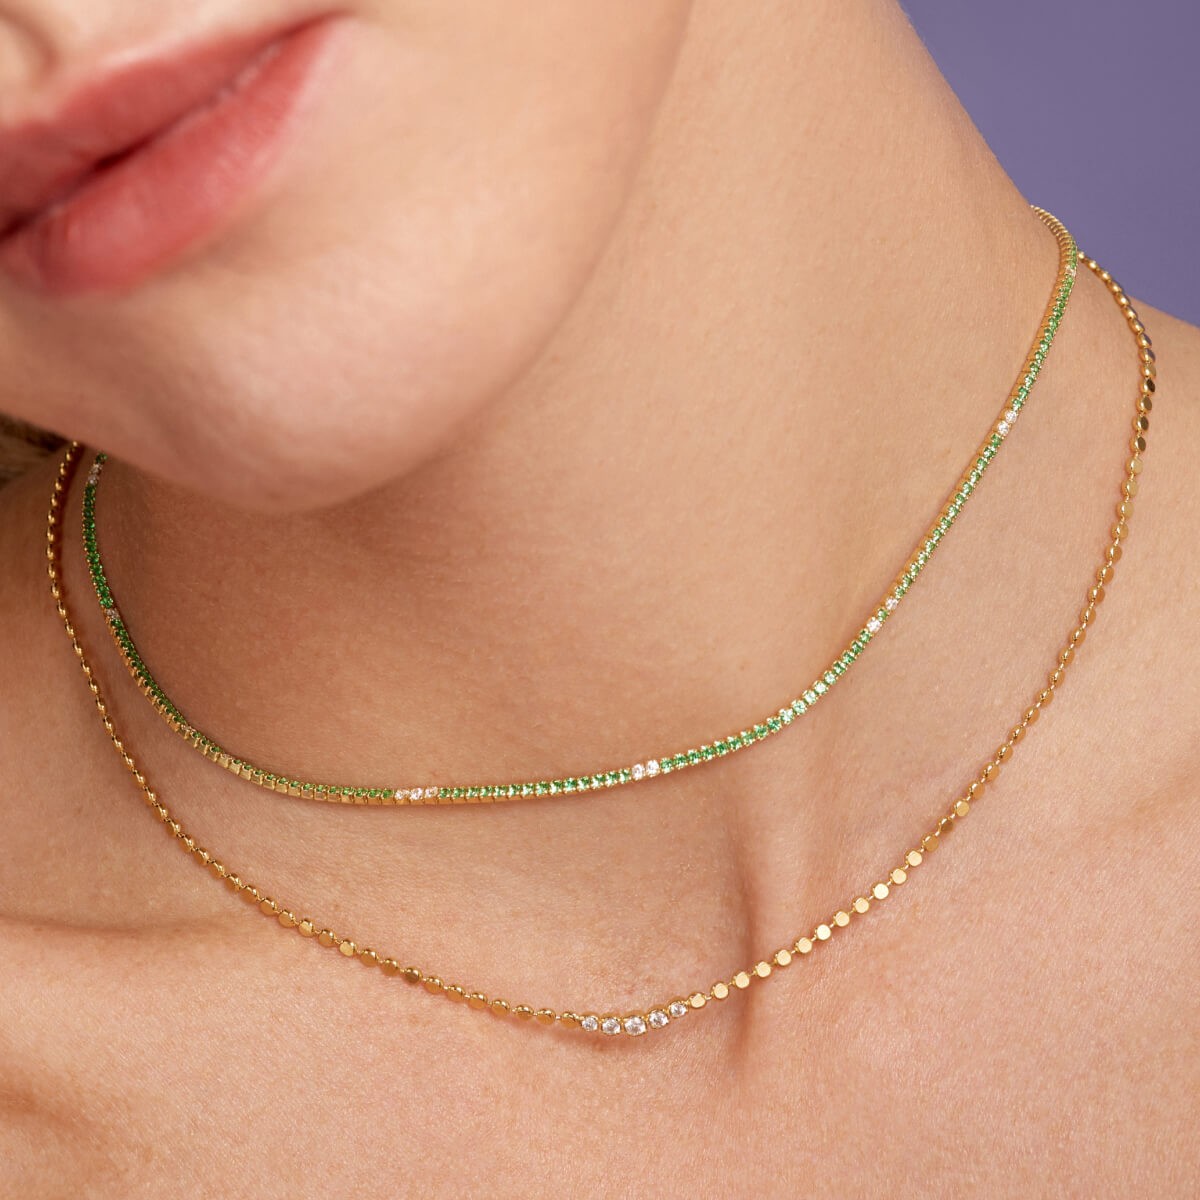 Green Goddess Necklace - Ketten - 18k vergoldet